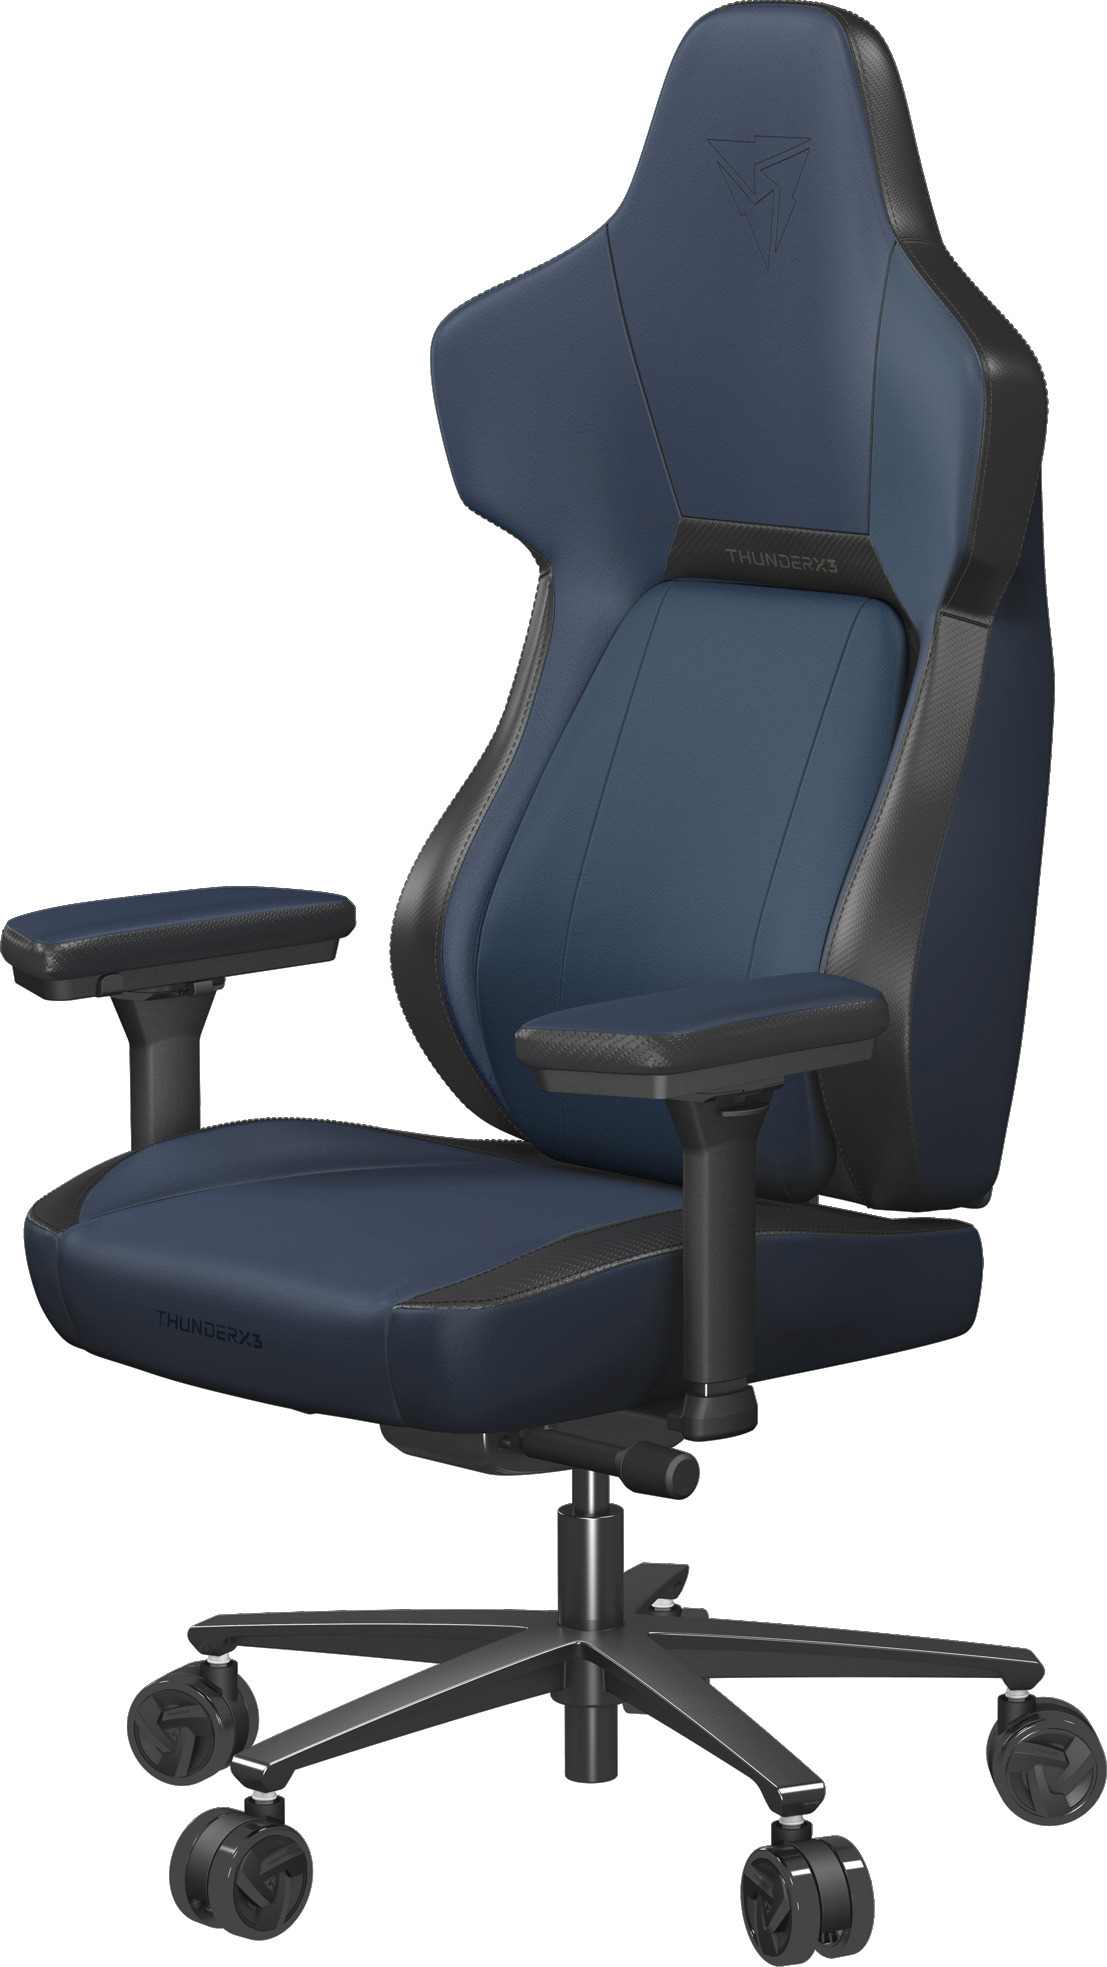 ThunderX3 - Cadeira Gaming ThunderX3 Core, Apoio lombar 360 graus - Modern Blue